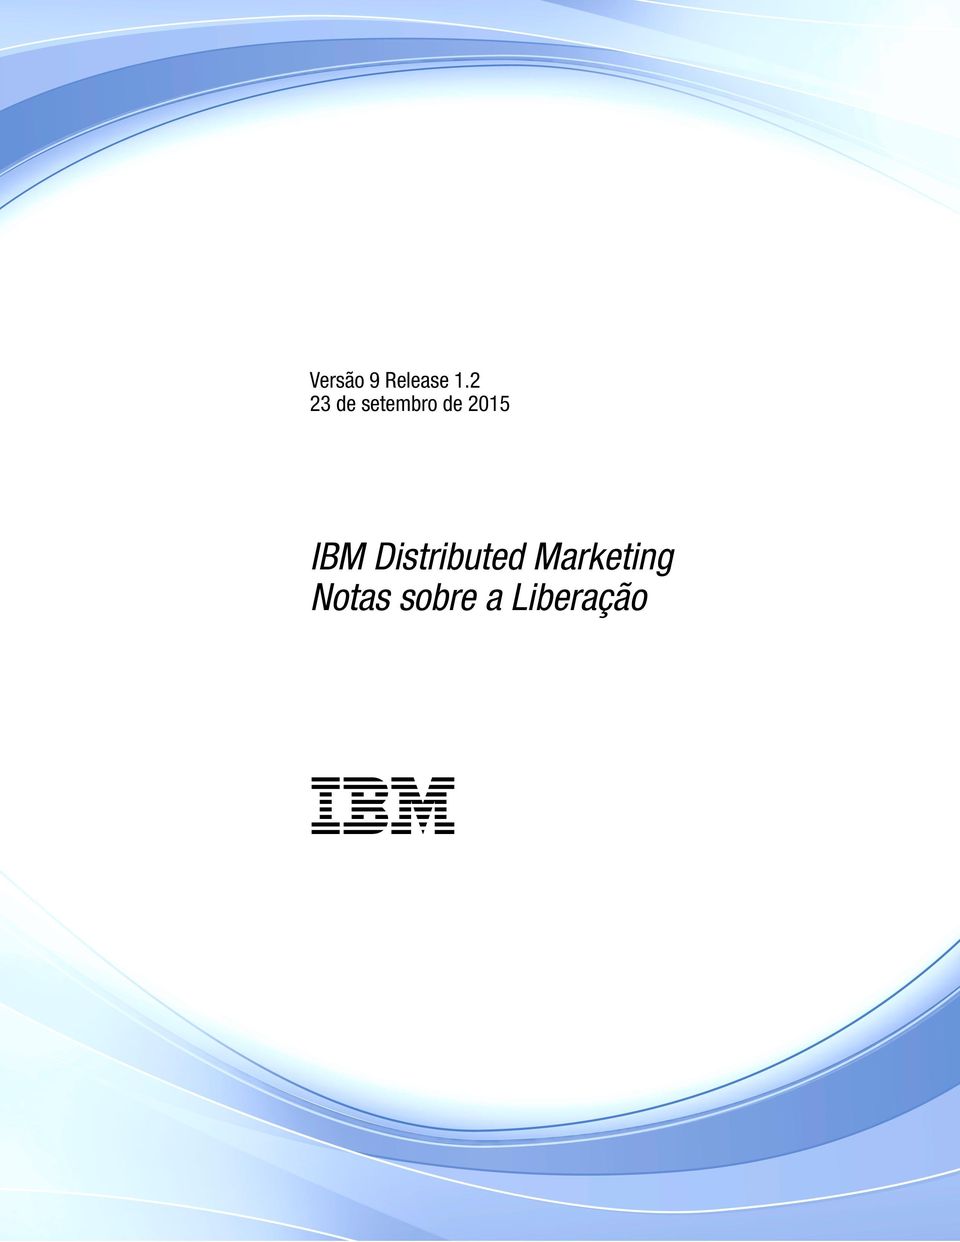 IBM Distributed